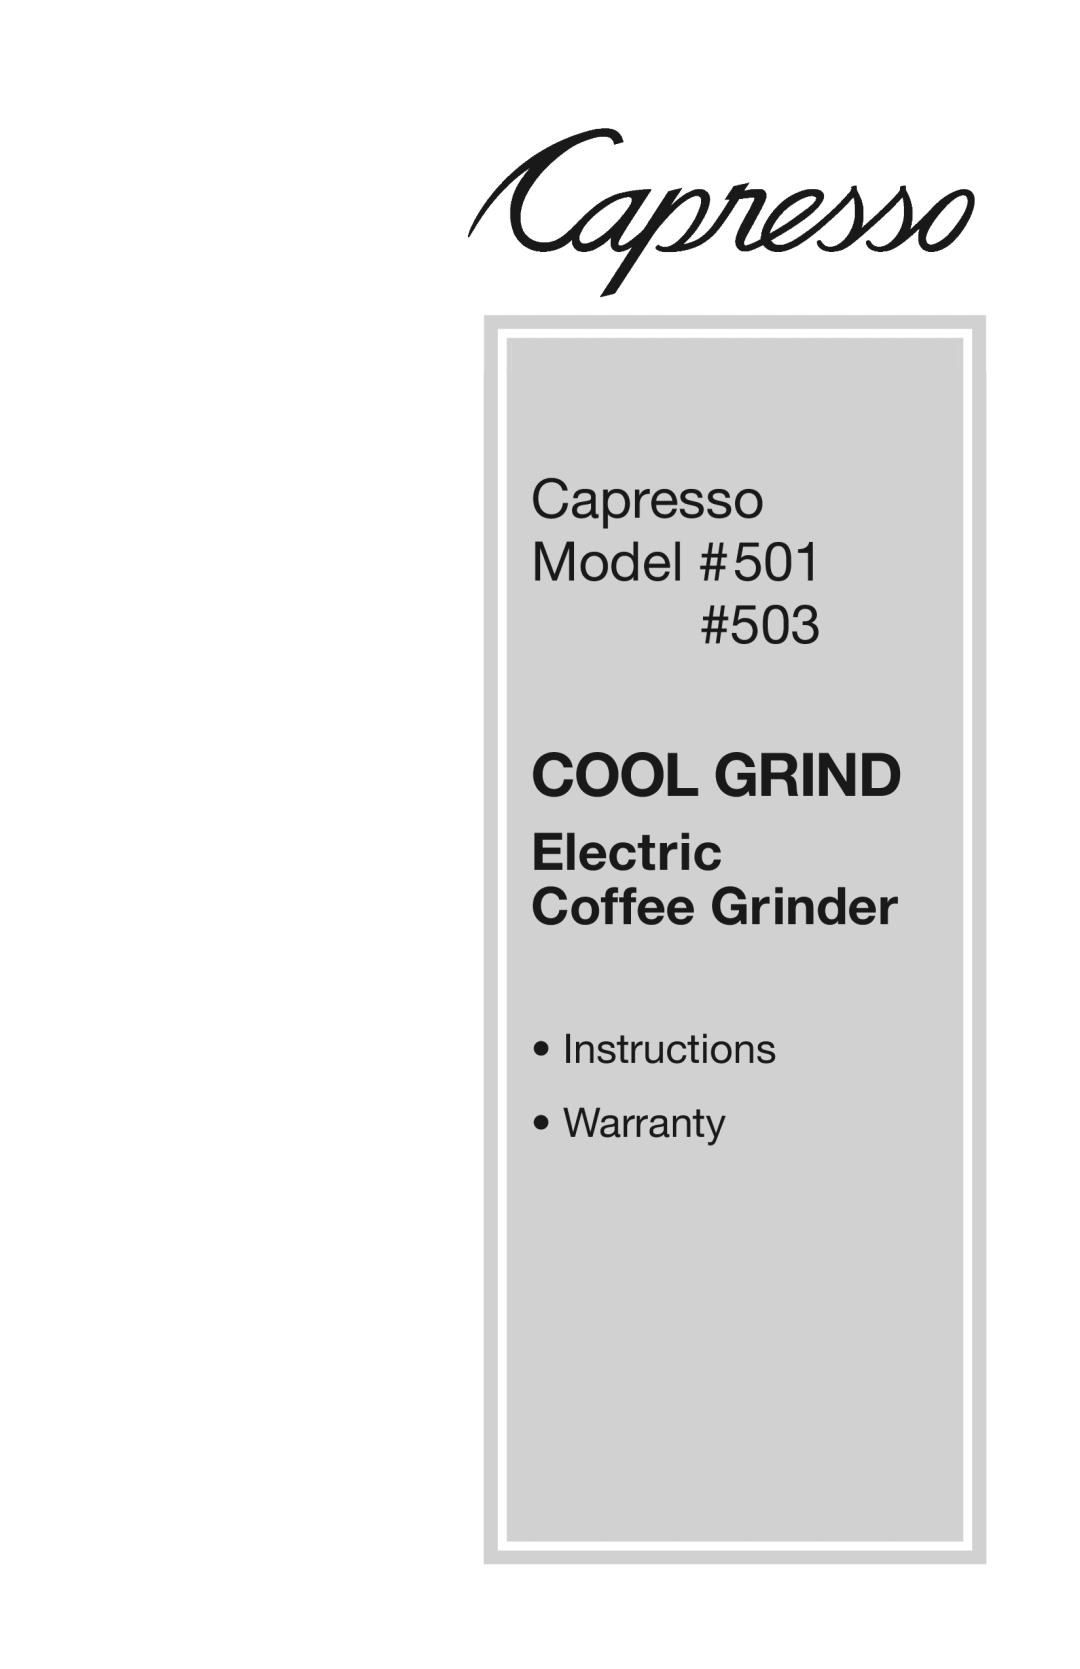 Capresso warranty Cool Grind, Capresso, Model #501, #503, Electric, Coffee Grinder, Instructions, Warranty 